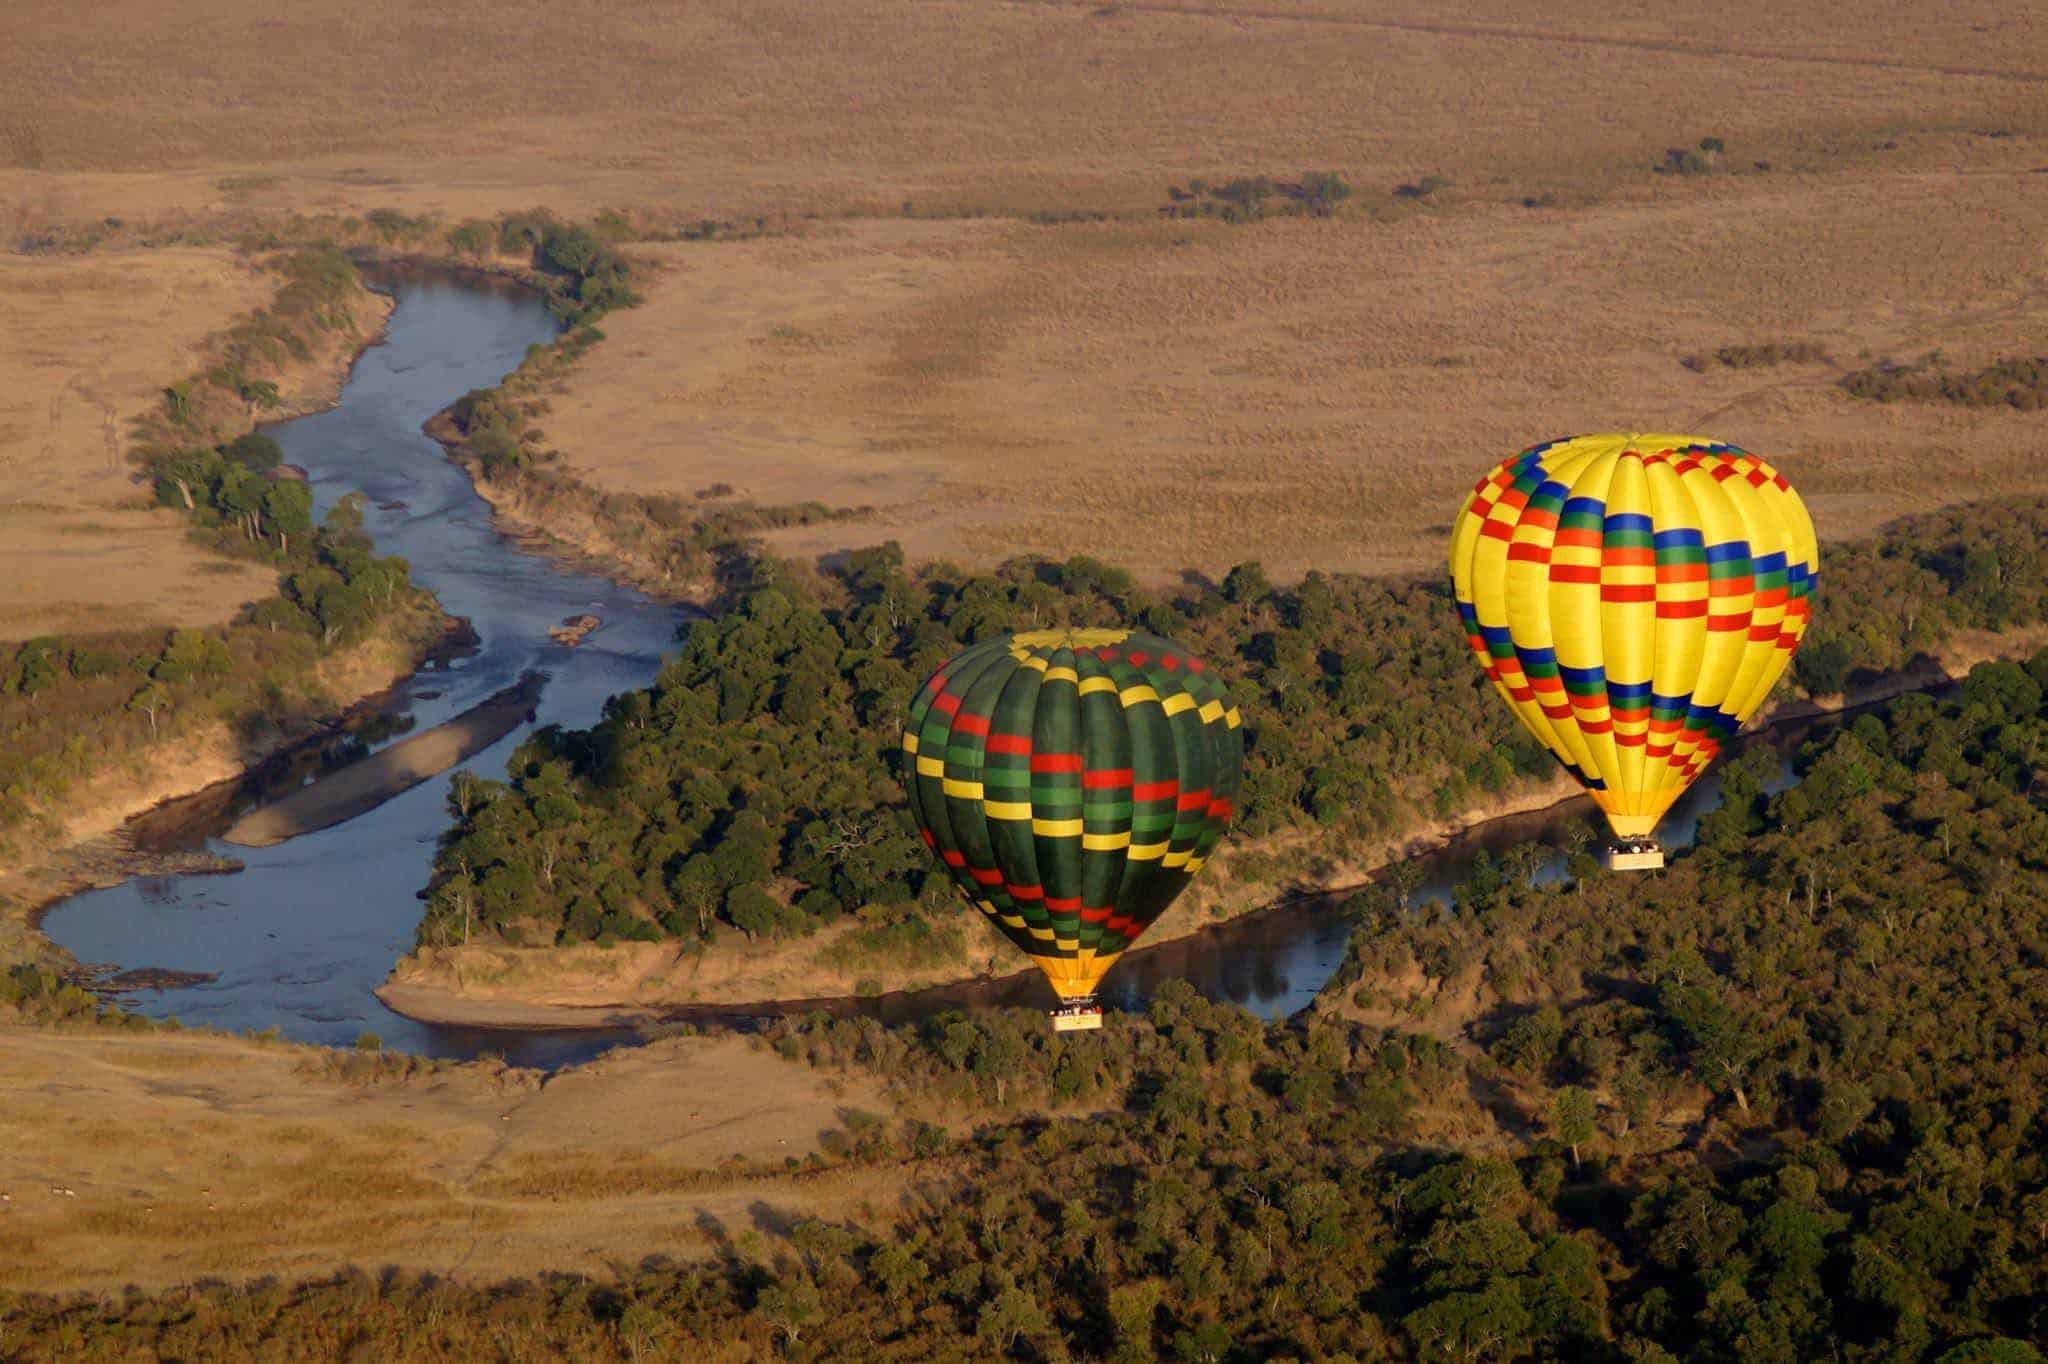 Enjoy hot air balloon safari in our mara mara, Kenya Safari